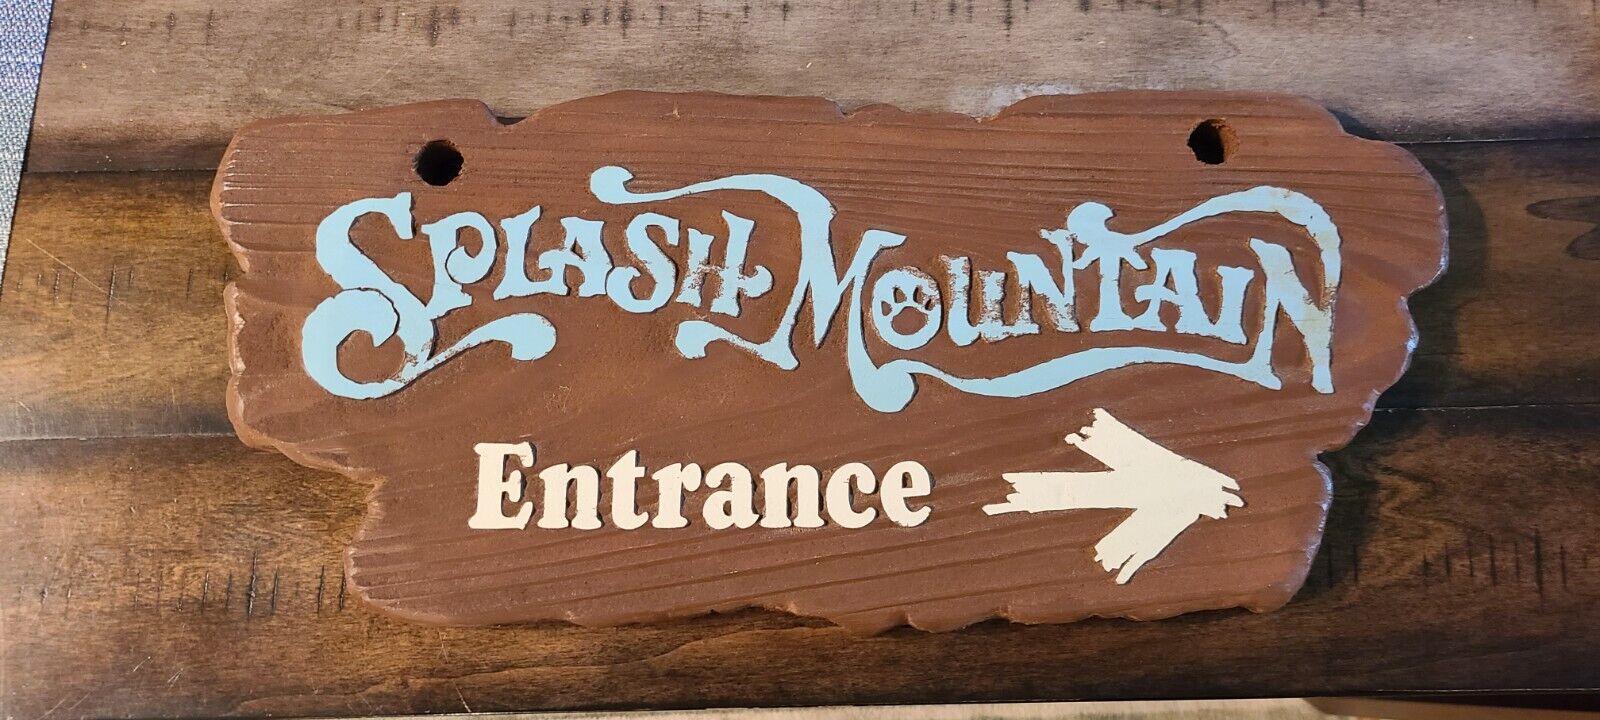 Disney World Splash Mountain Entrance sign